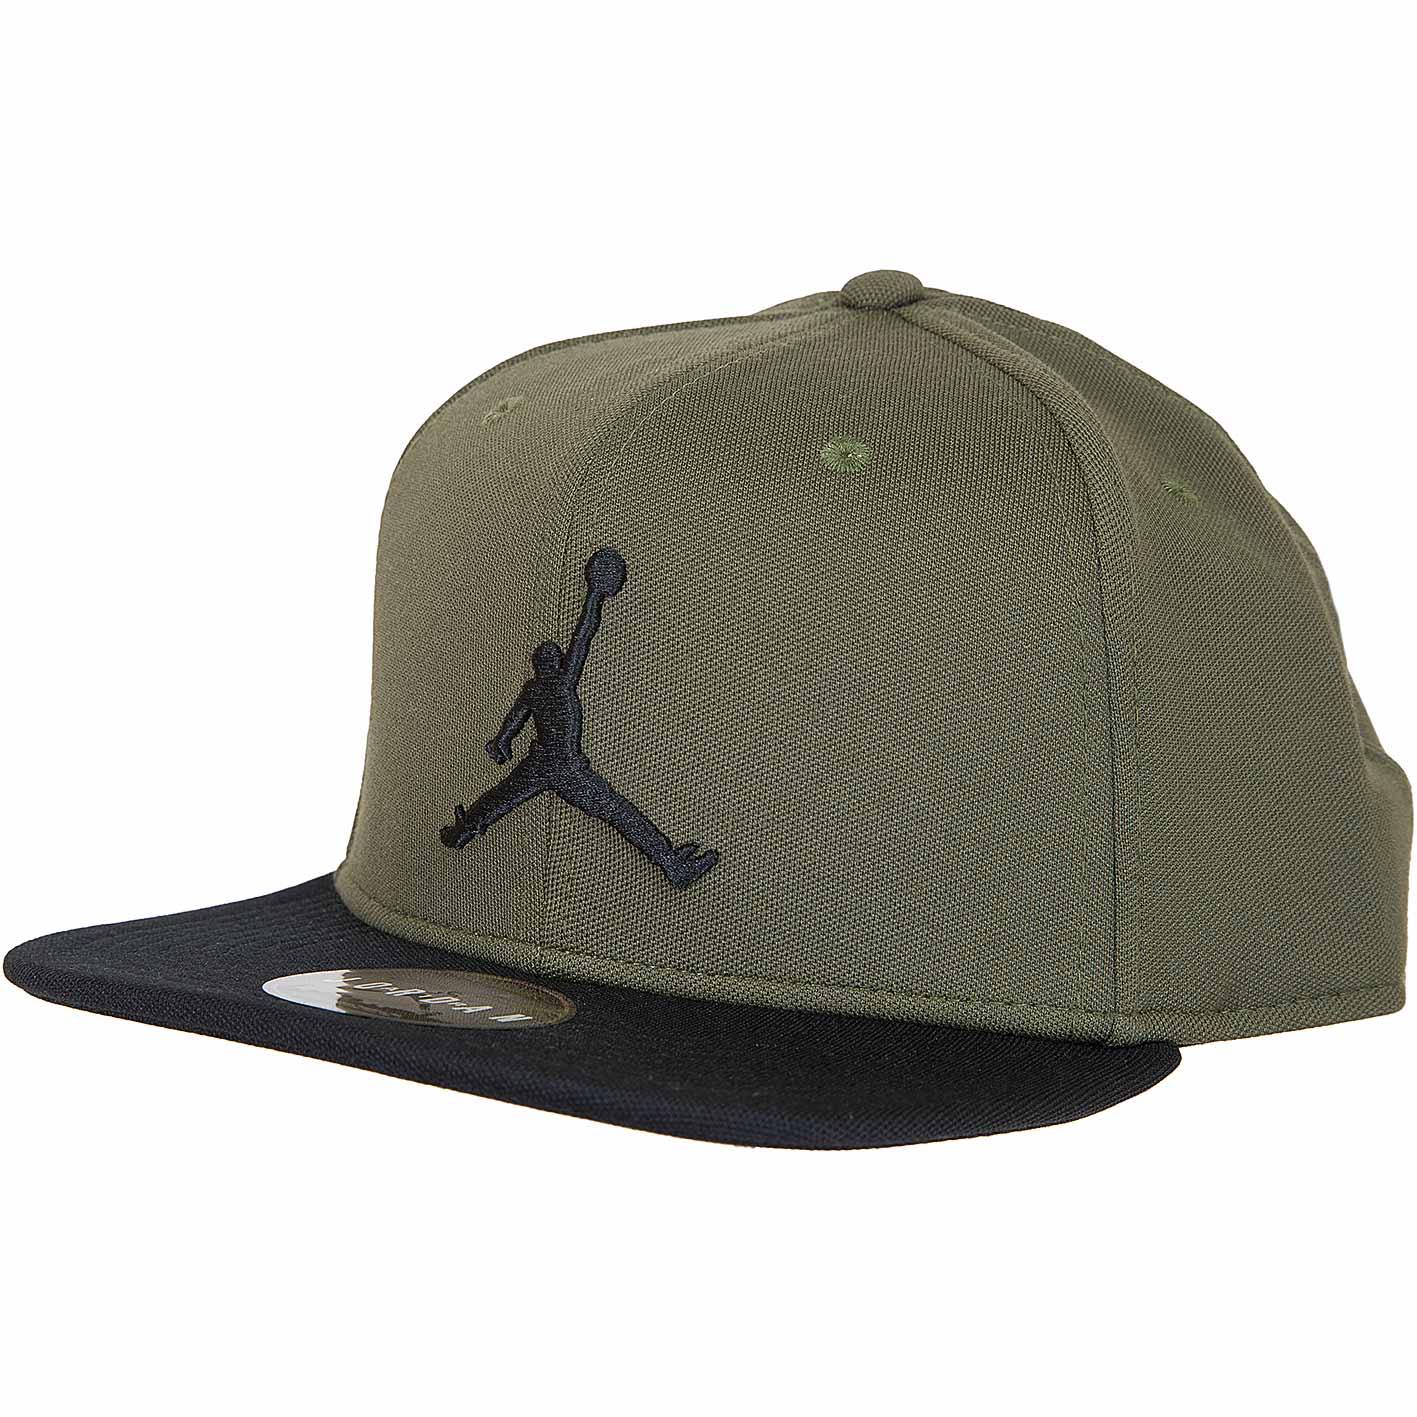 Nike Snapback Cap Jordan Jumpman Olivschwarz Hier Bestellen